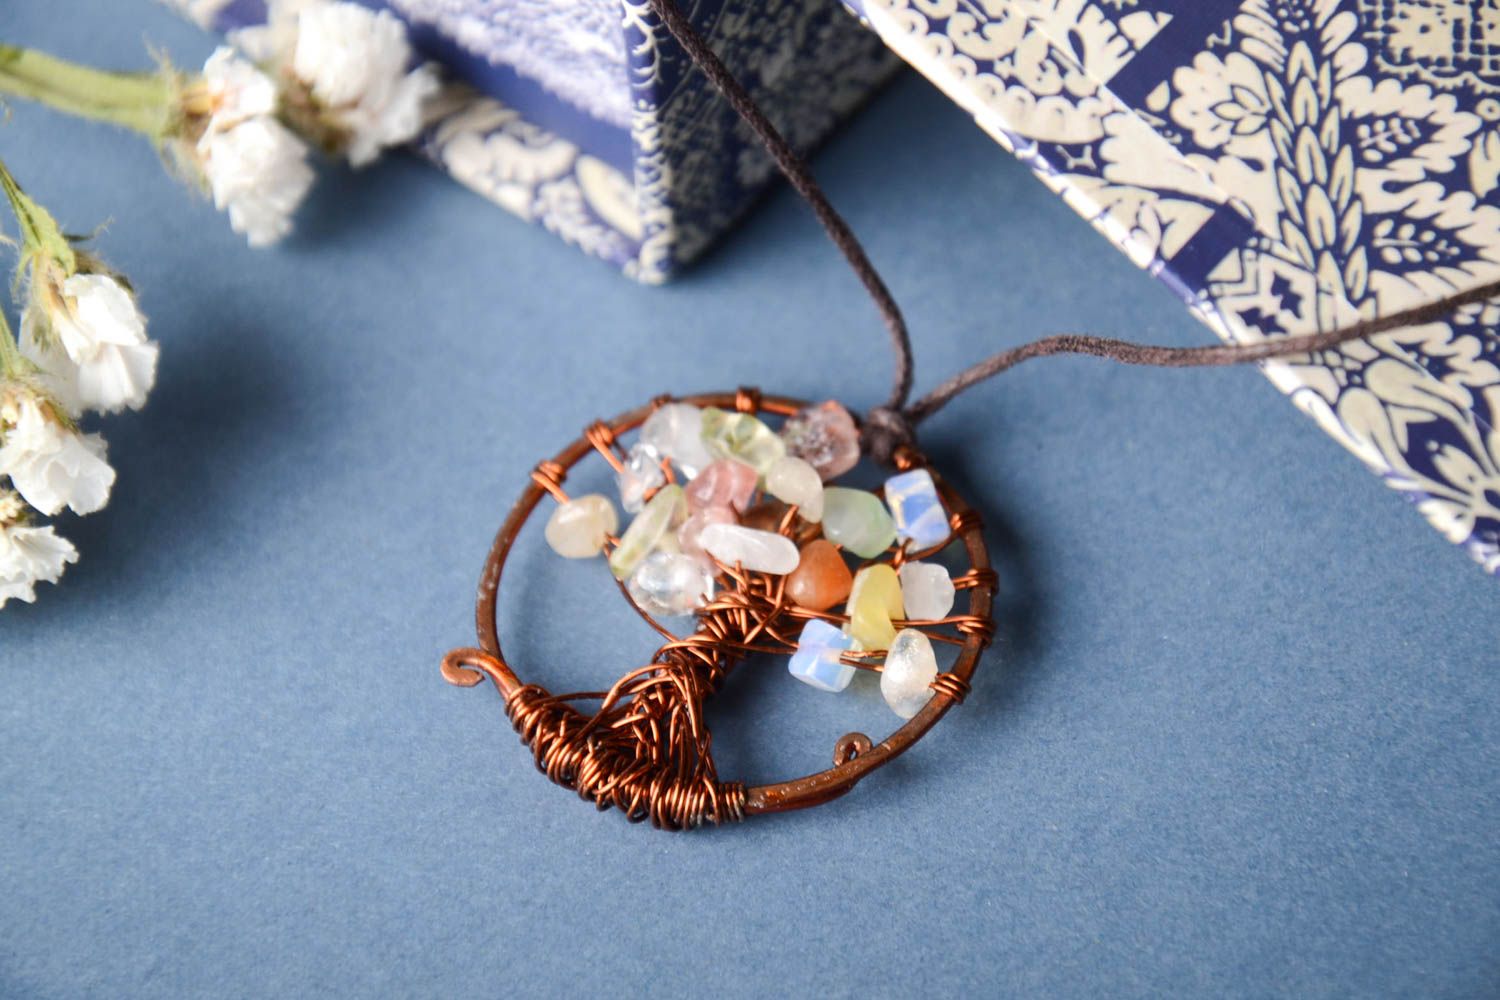 Handmade pendant designer accessory copper jewelry pendant with natural stones photo 1